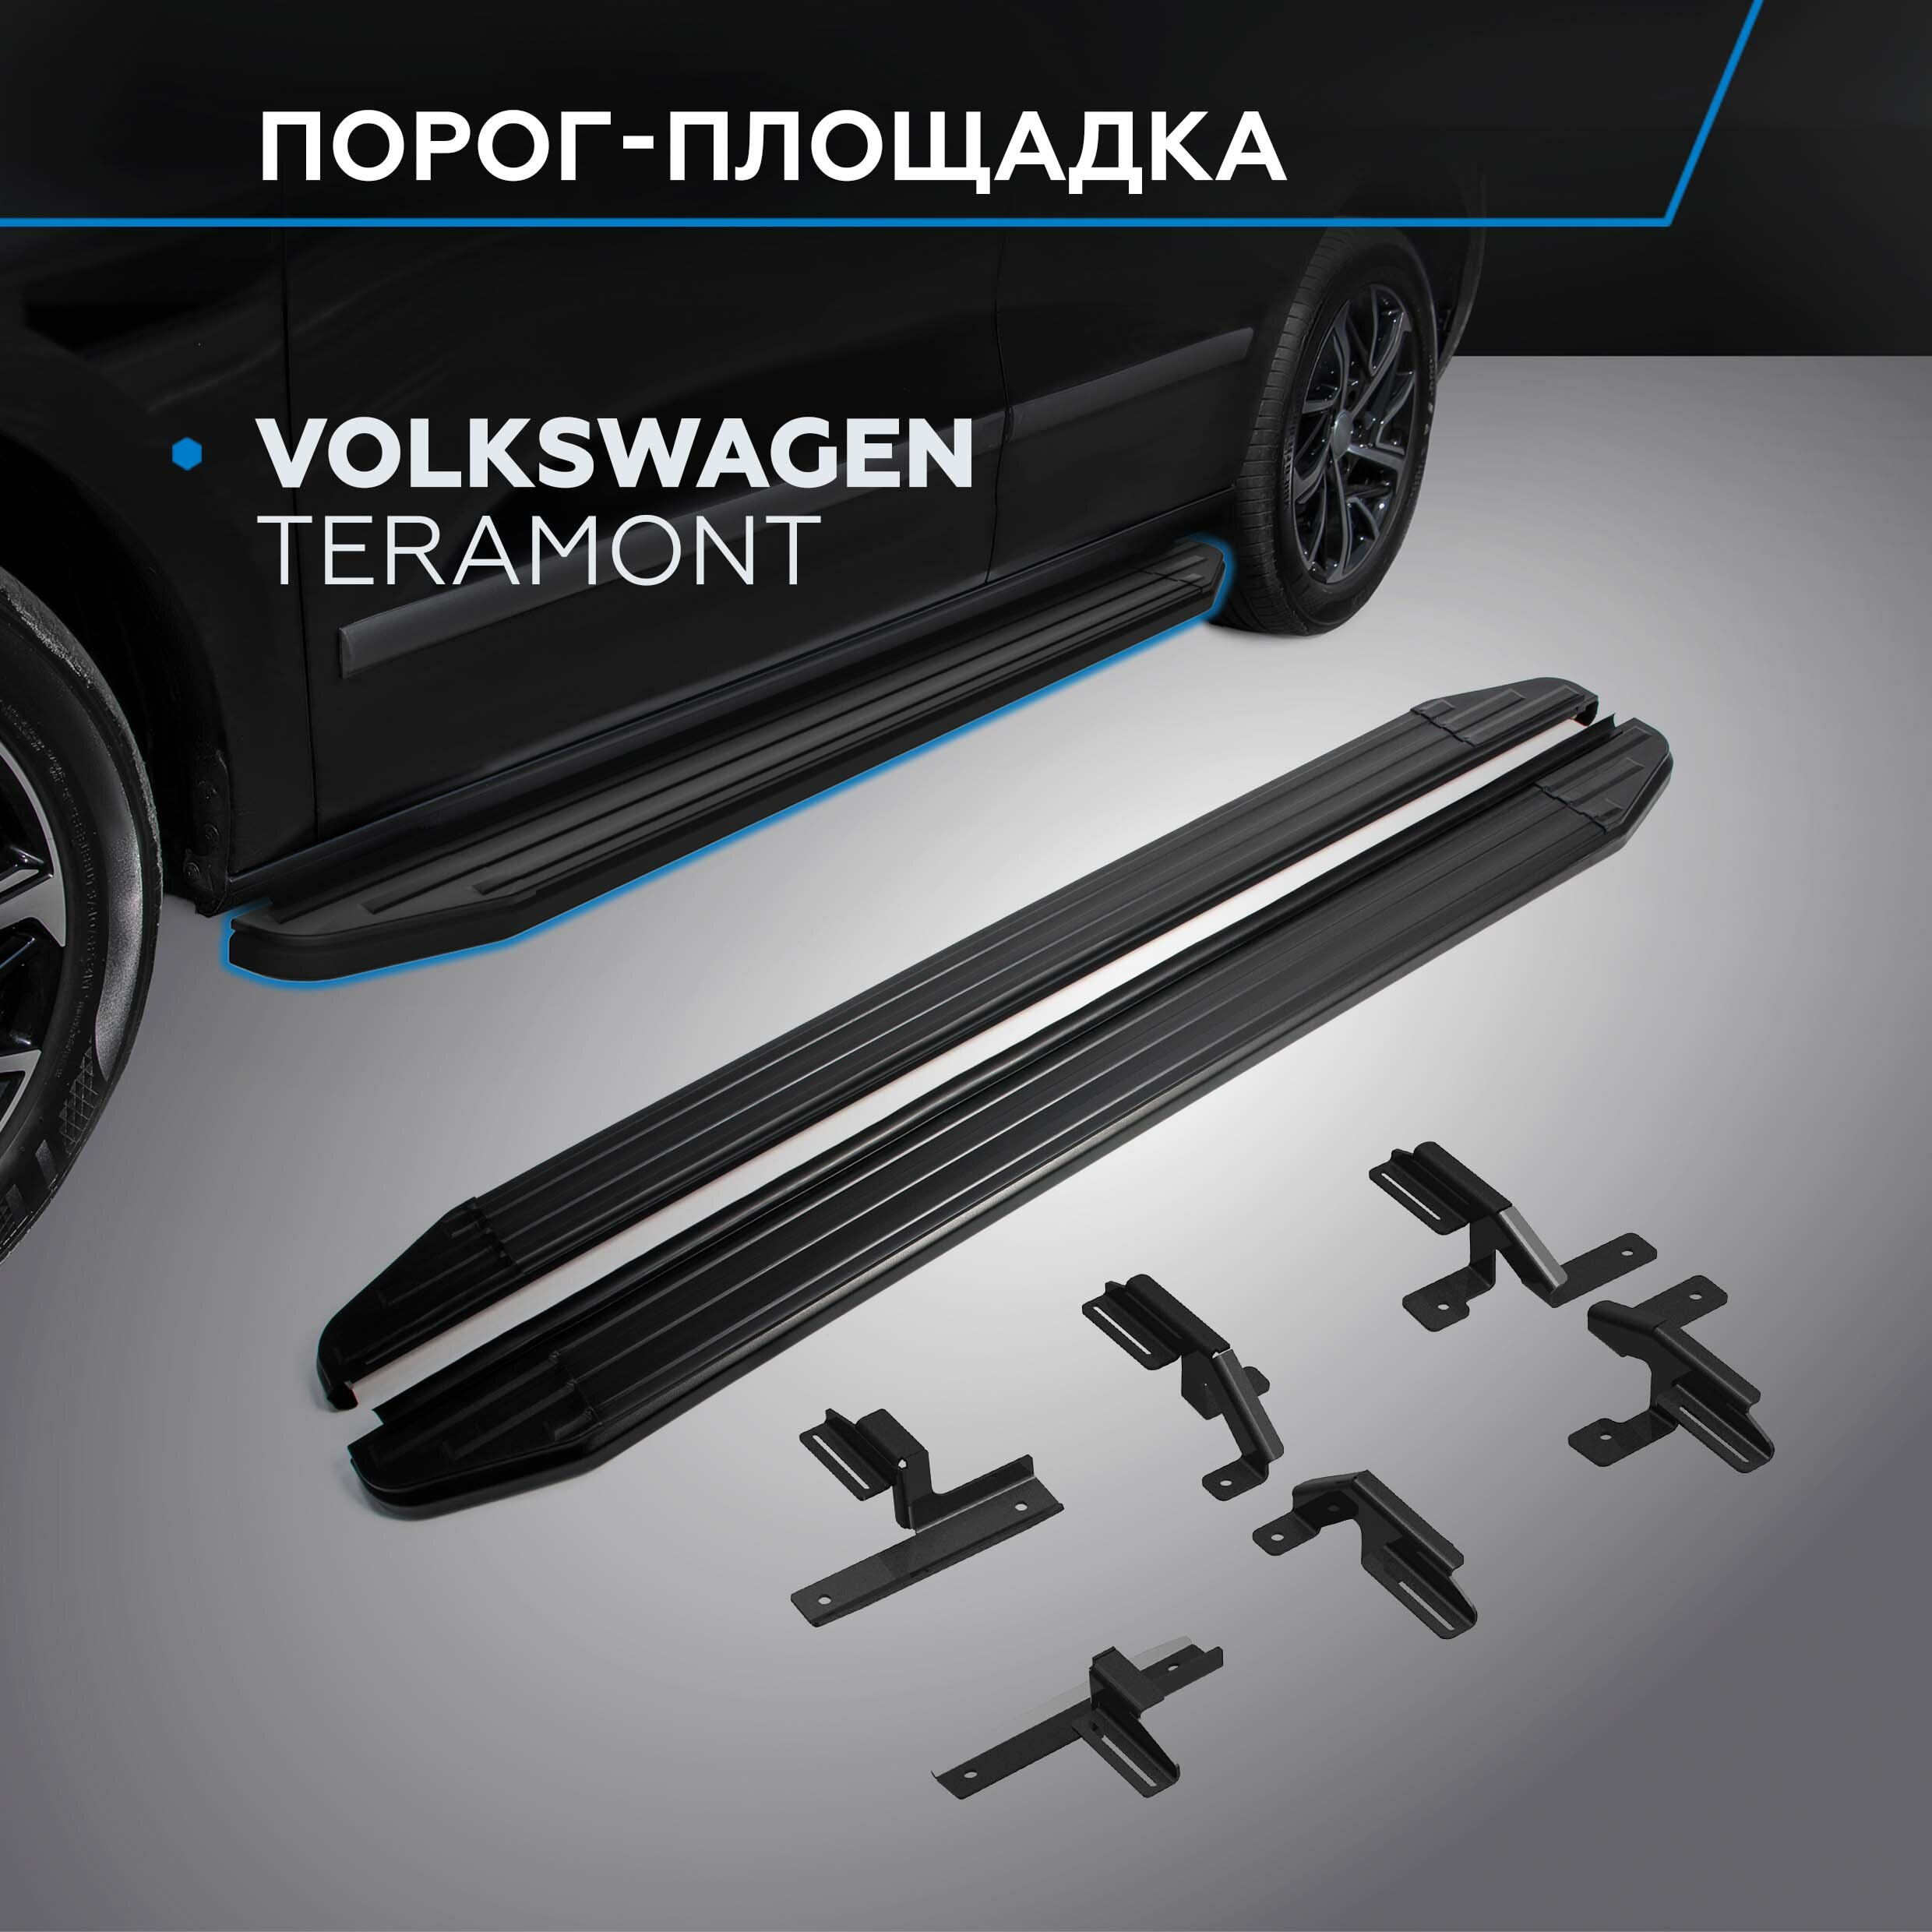 Пороги на автомобиль "Premium-Black" Rival для Volkswagen Teramont 2017-2020 193 см 2 шт алюминий A193ALB.5805.1